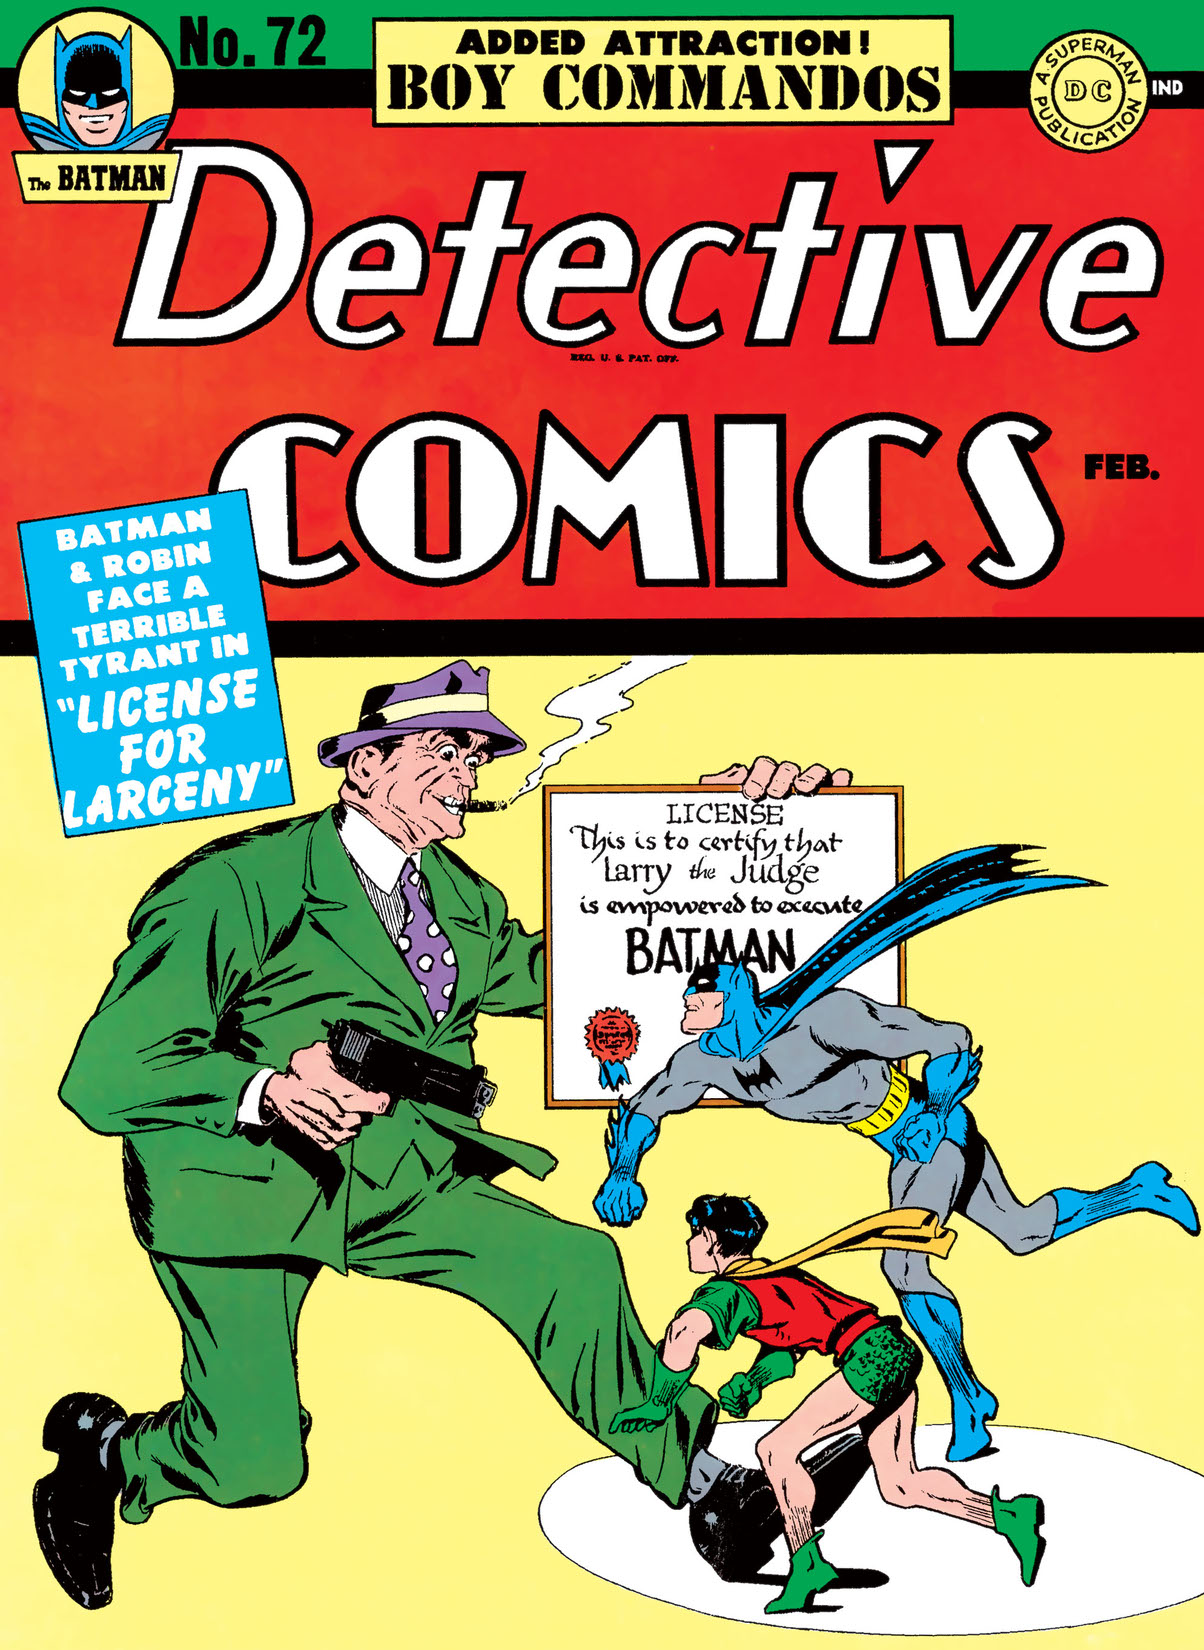 Detective Comics (1942-) #72 preview images